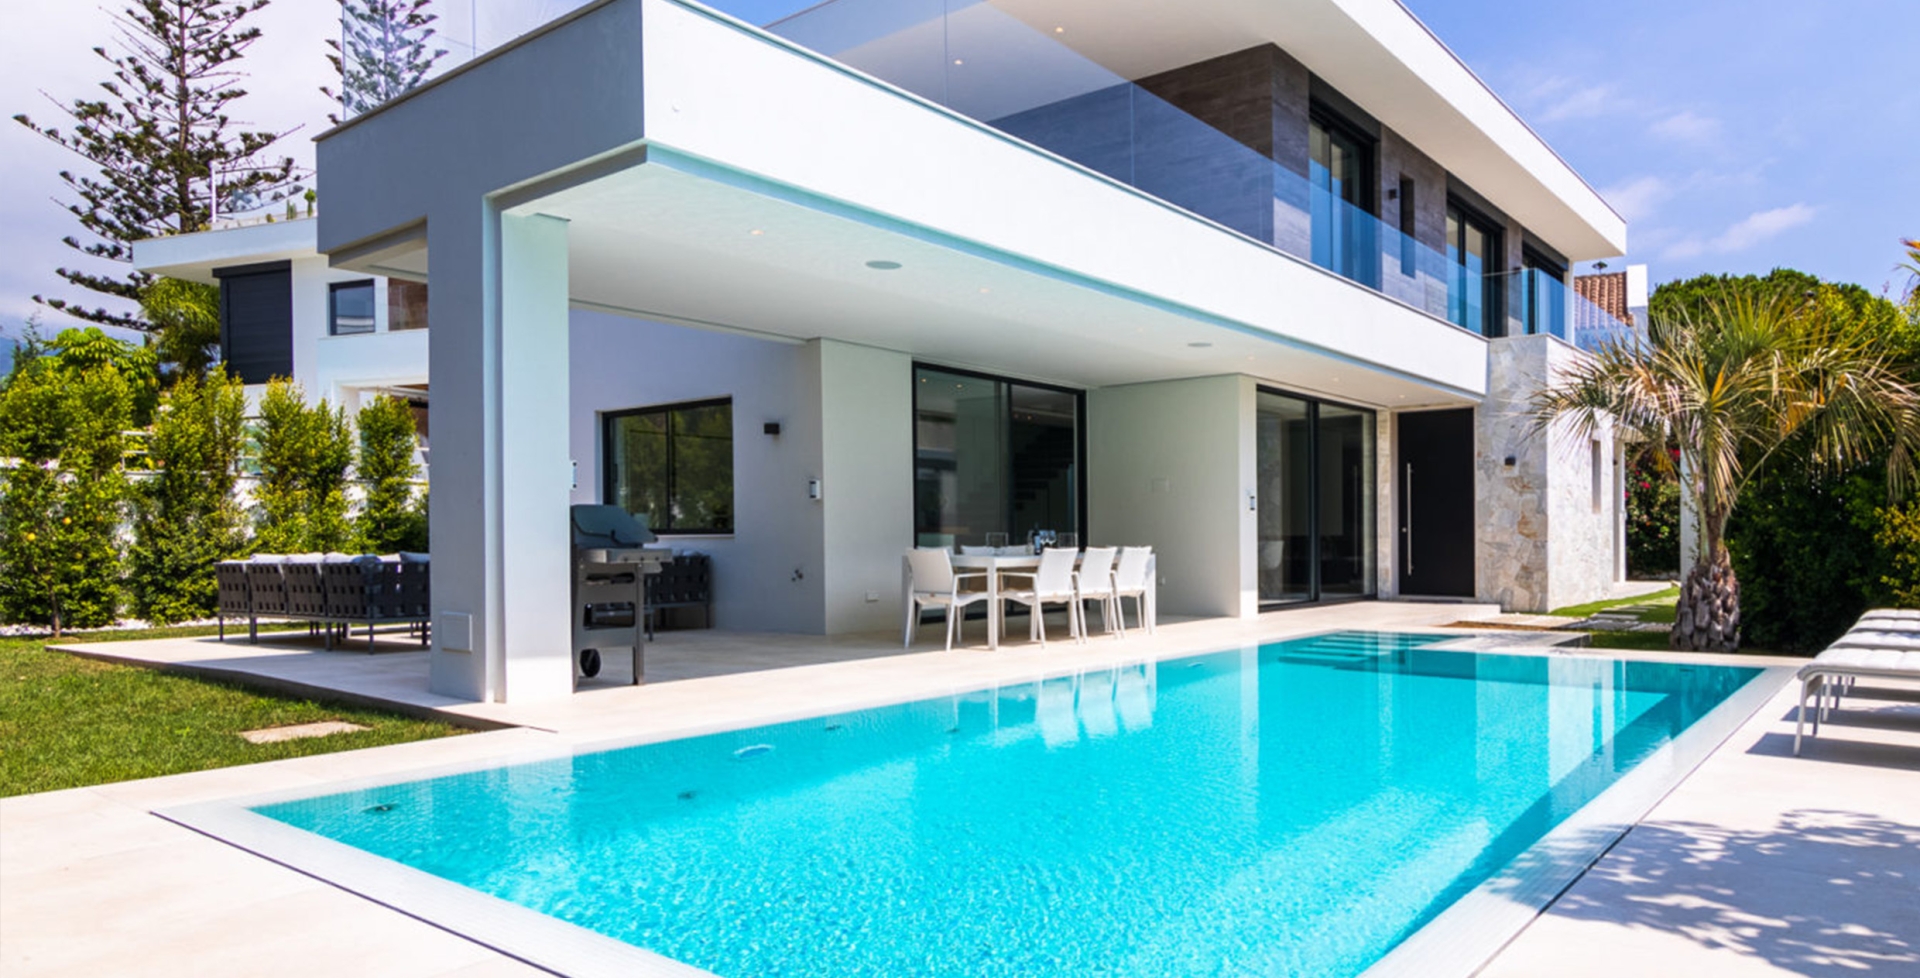 Villa G Marbella stunning building and pool